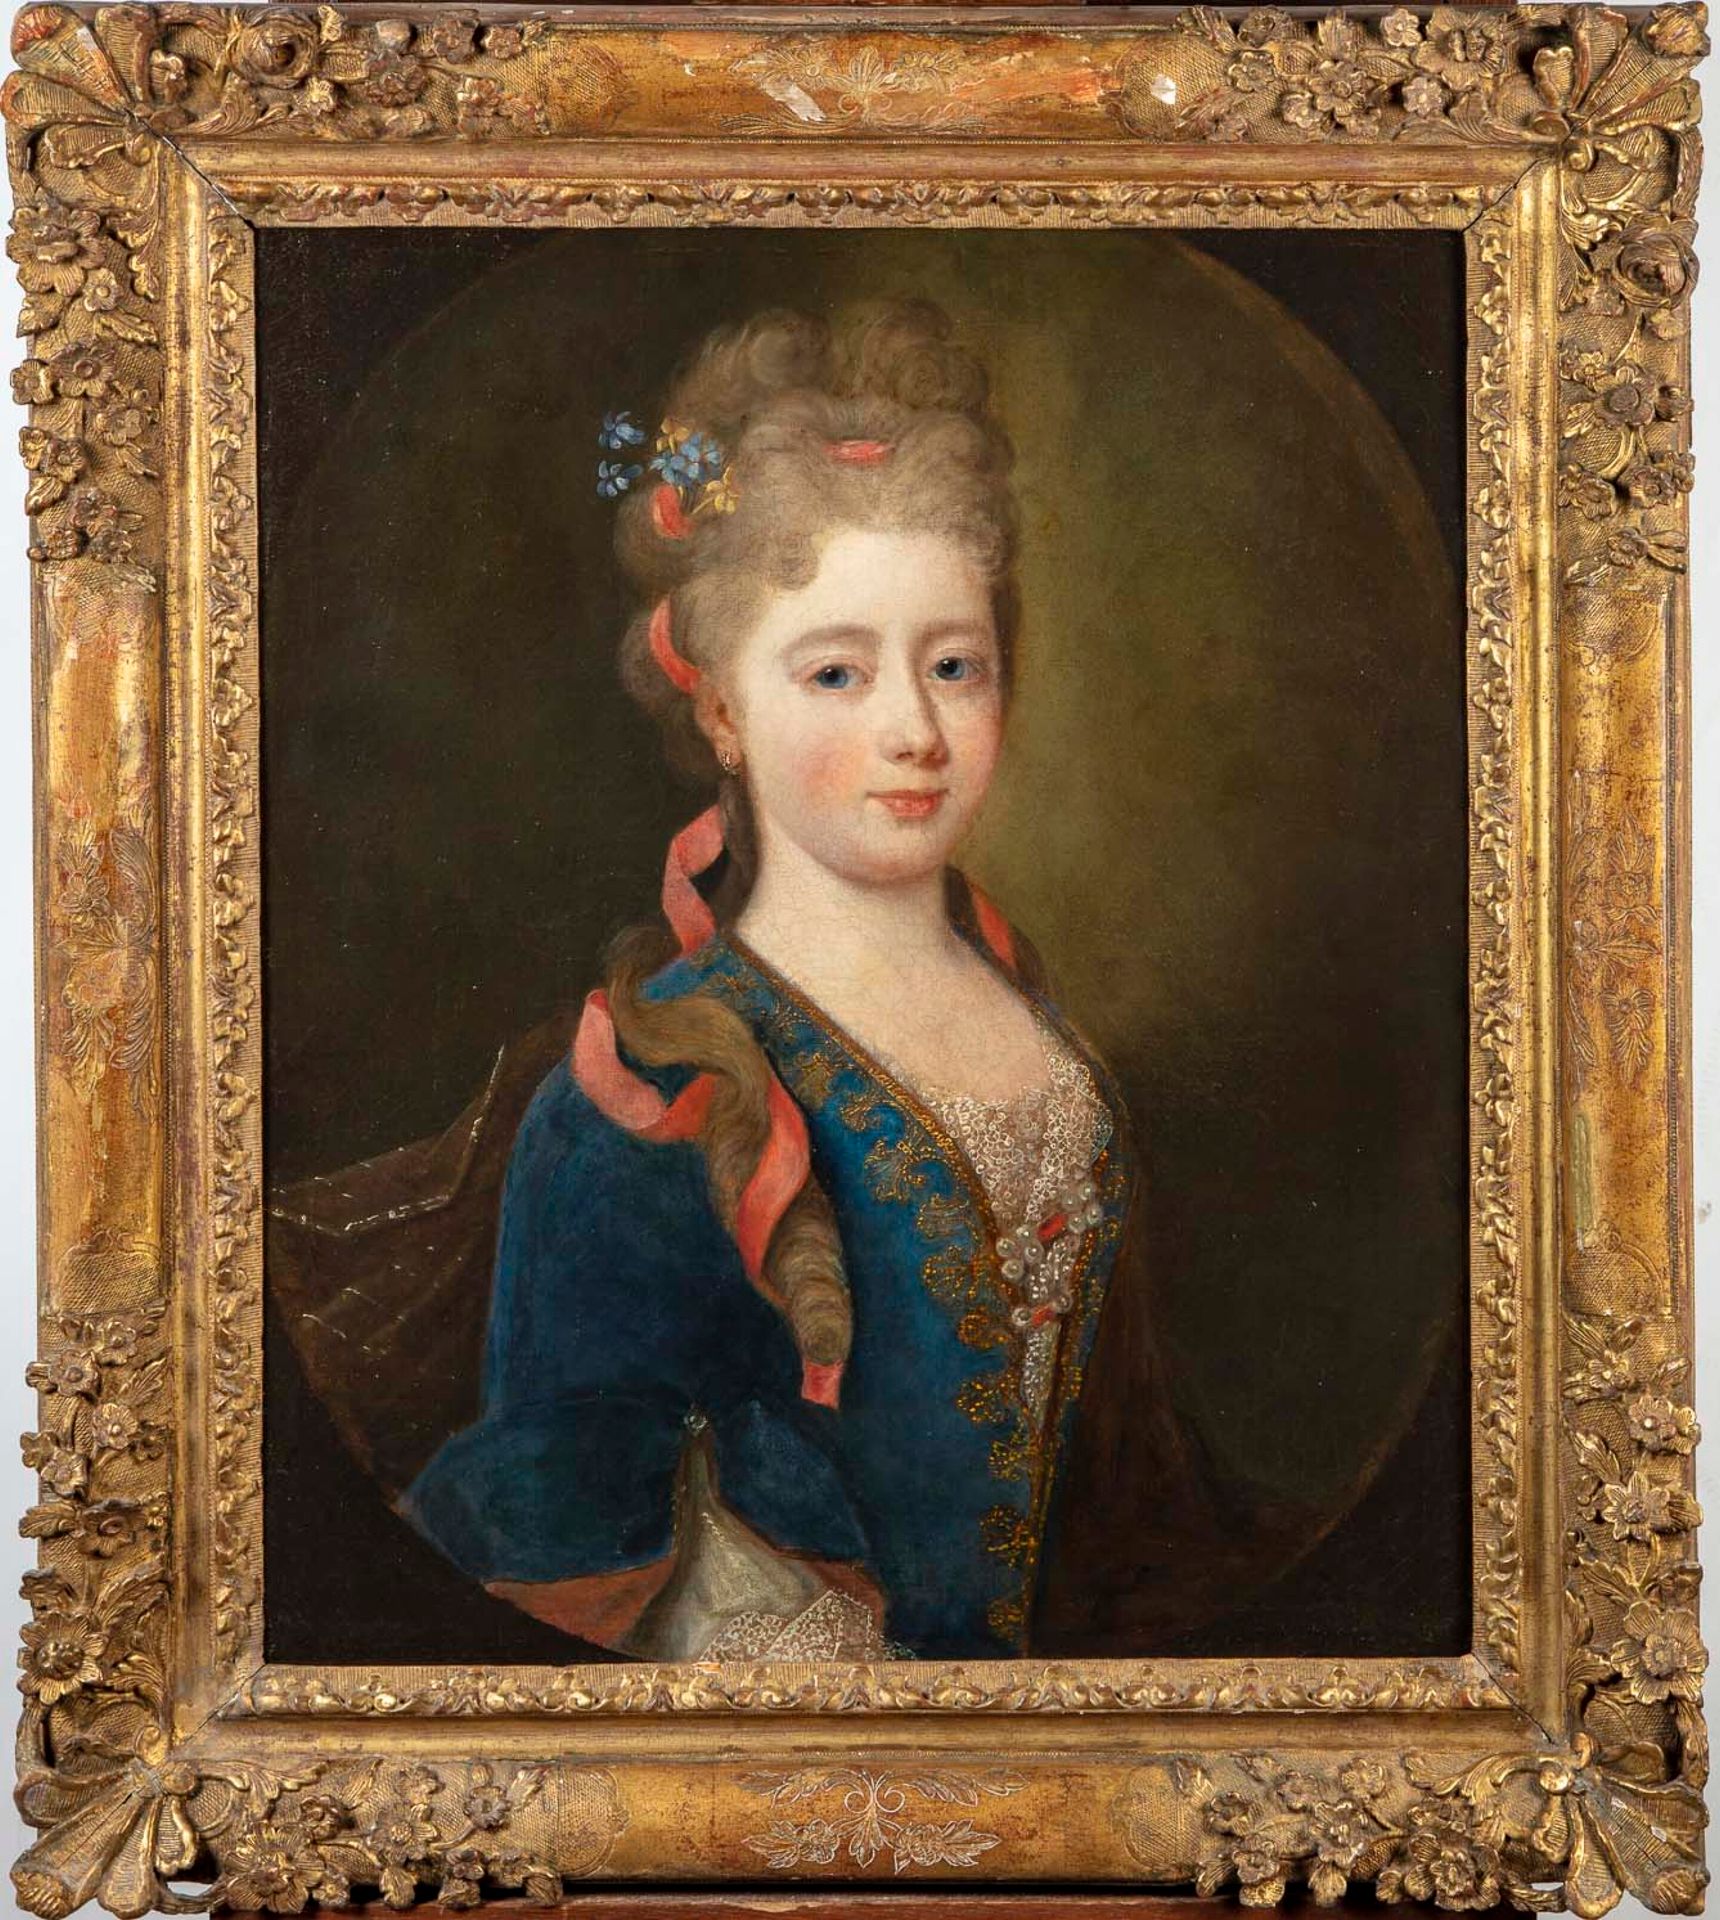 ECOLE FRANCAISE XVIIIè 18世纪法国学校

蒙特斯潘夫人的侍从夫人奥耶尔夫人的画像

布面油画，有内衬

66 x 55厘米

修缮